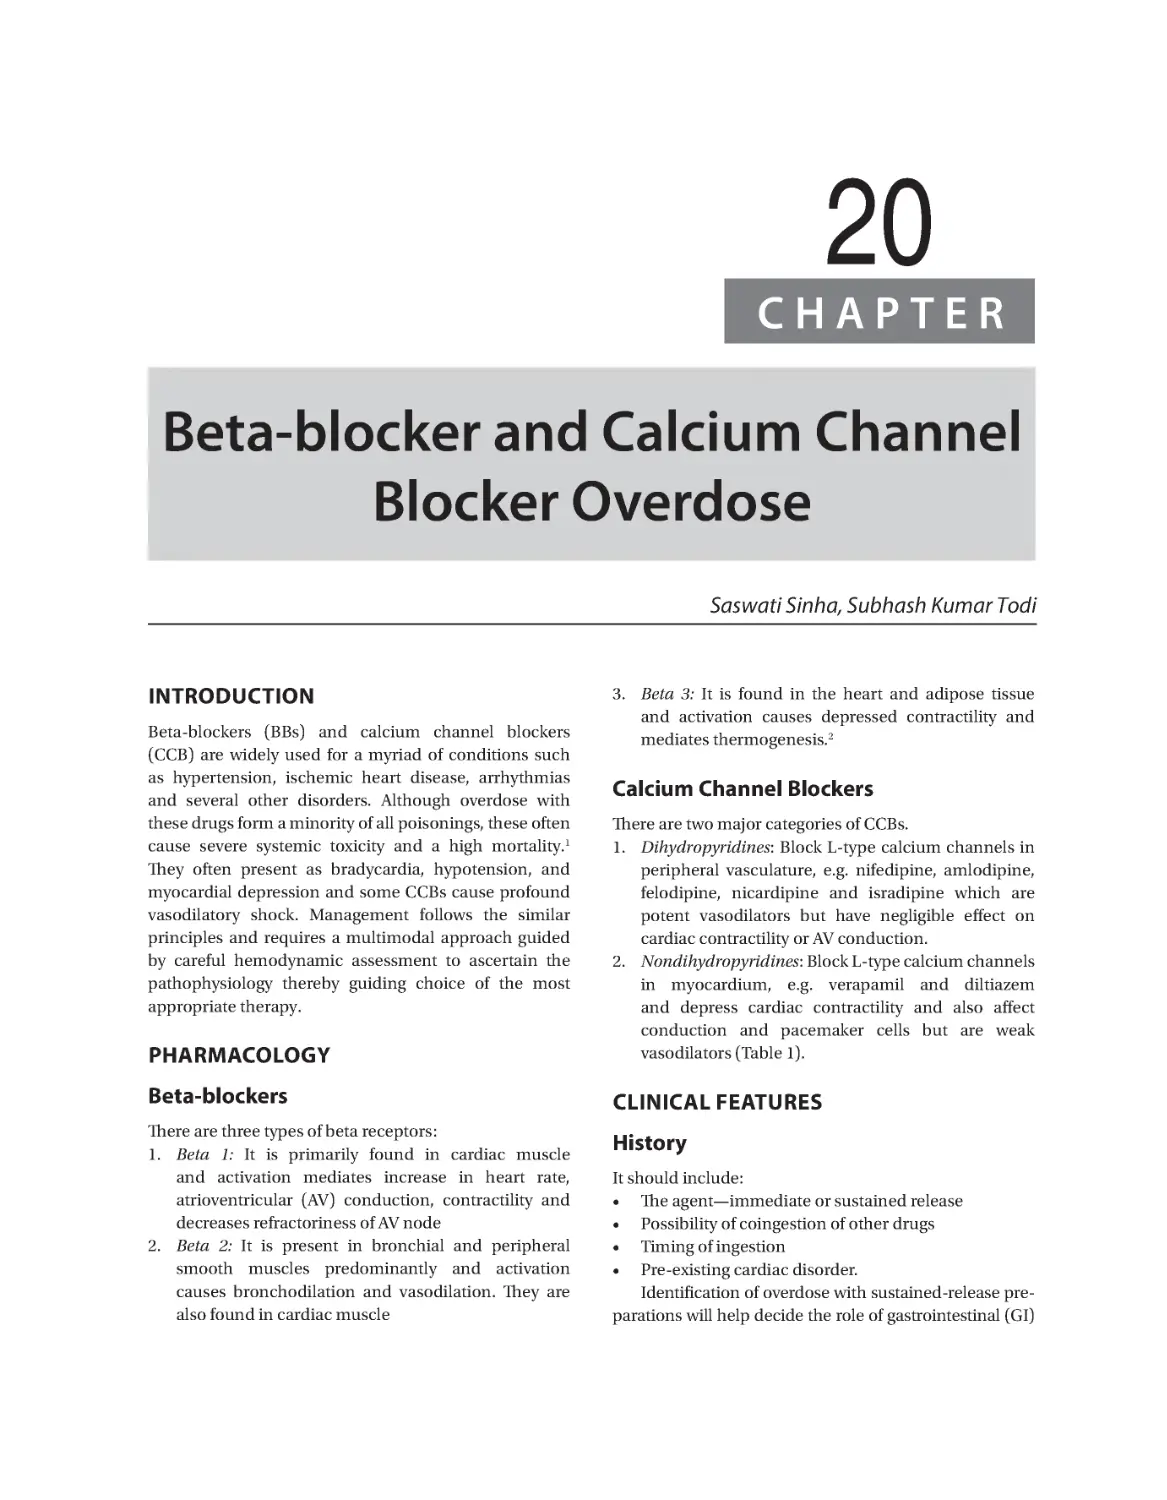 Chapter 20: Beta-blocker and Calcium Channel Blocker Overdose